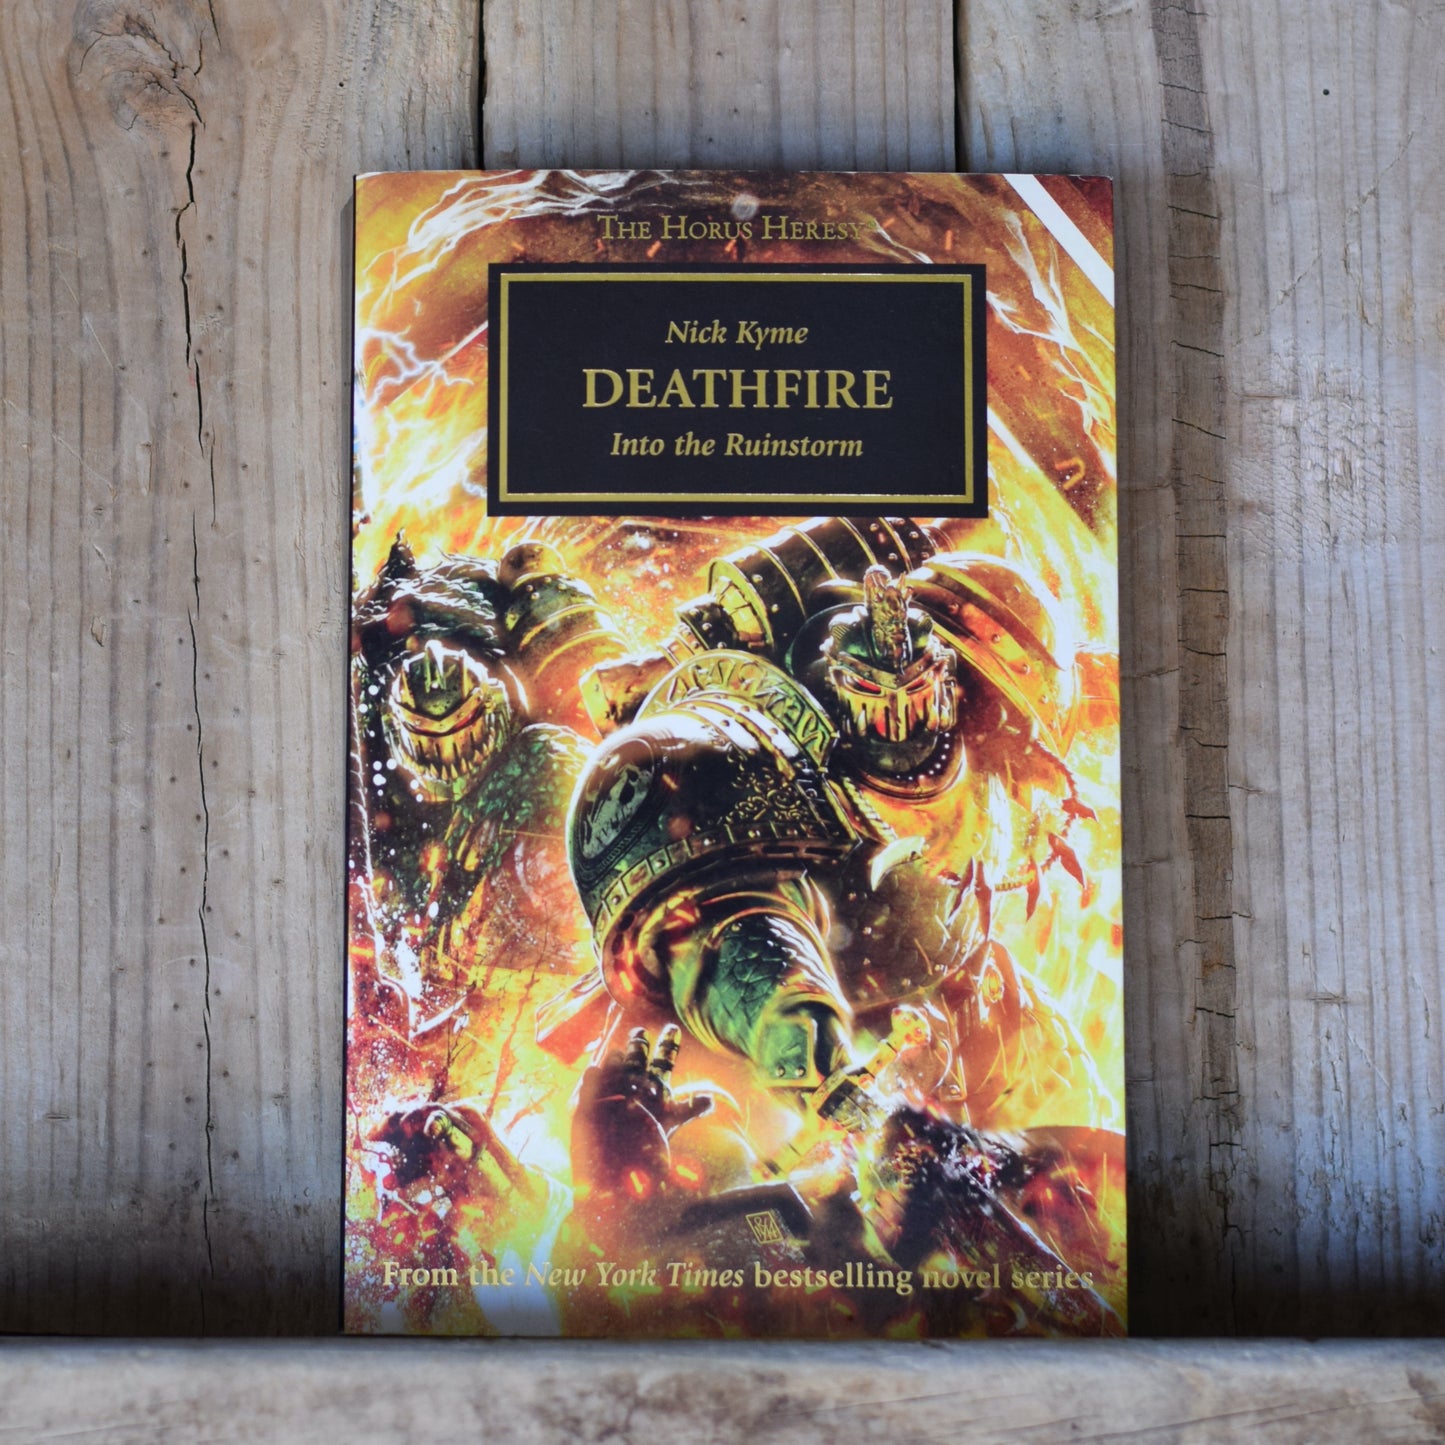 Warhammer Fantasy Paperback: Nick Kyme - The Horus Heresy, Deathfire FIRST PRINTING